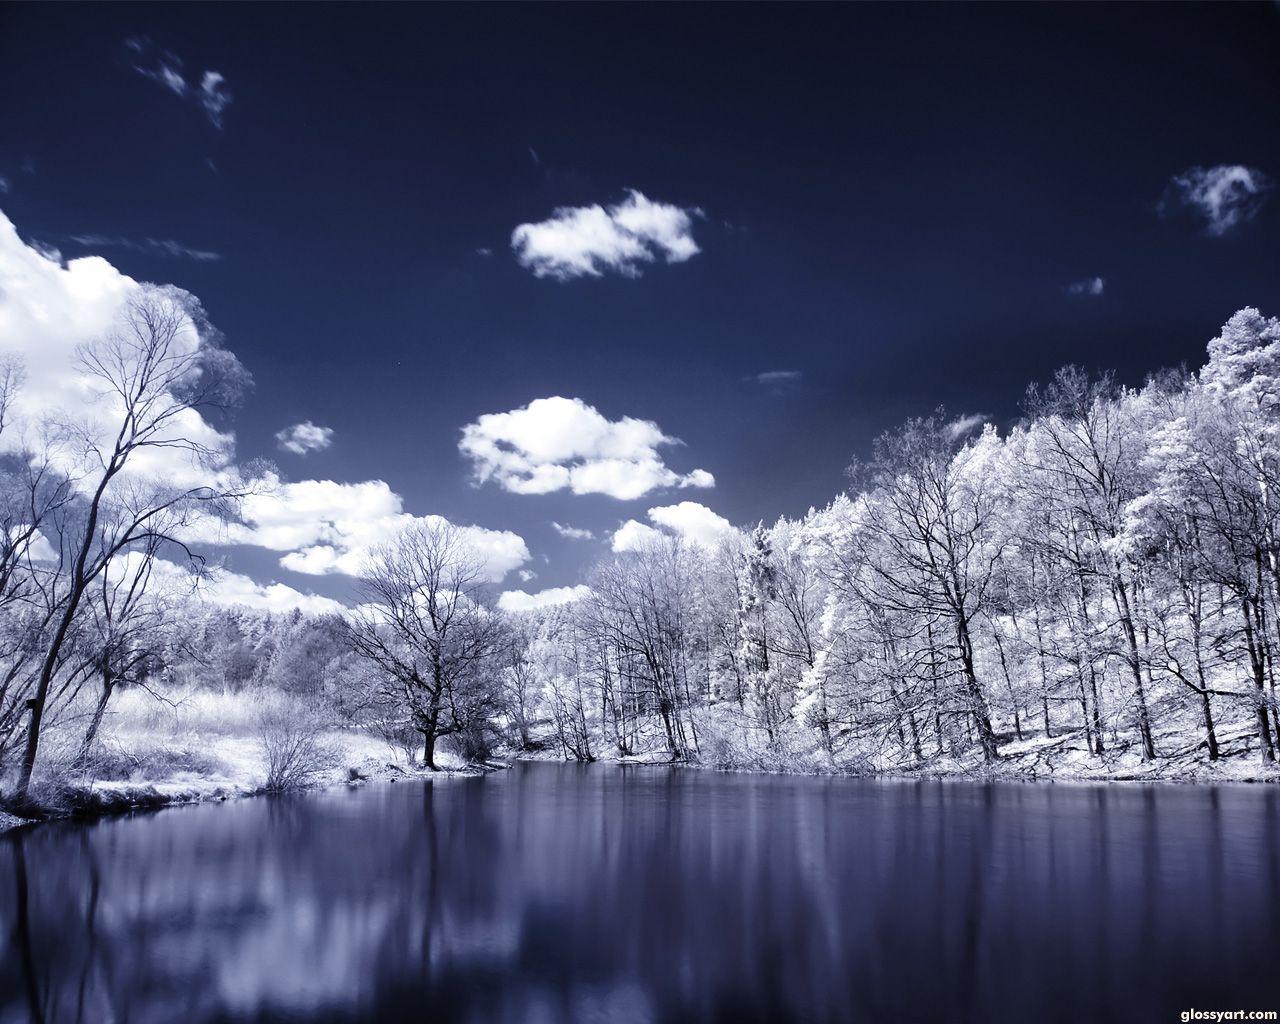 Beauty Sky at Winter Wallpaper, iPhone Wallpaper, Facebook Cover